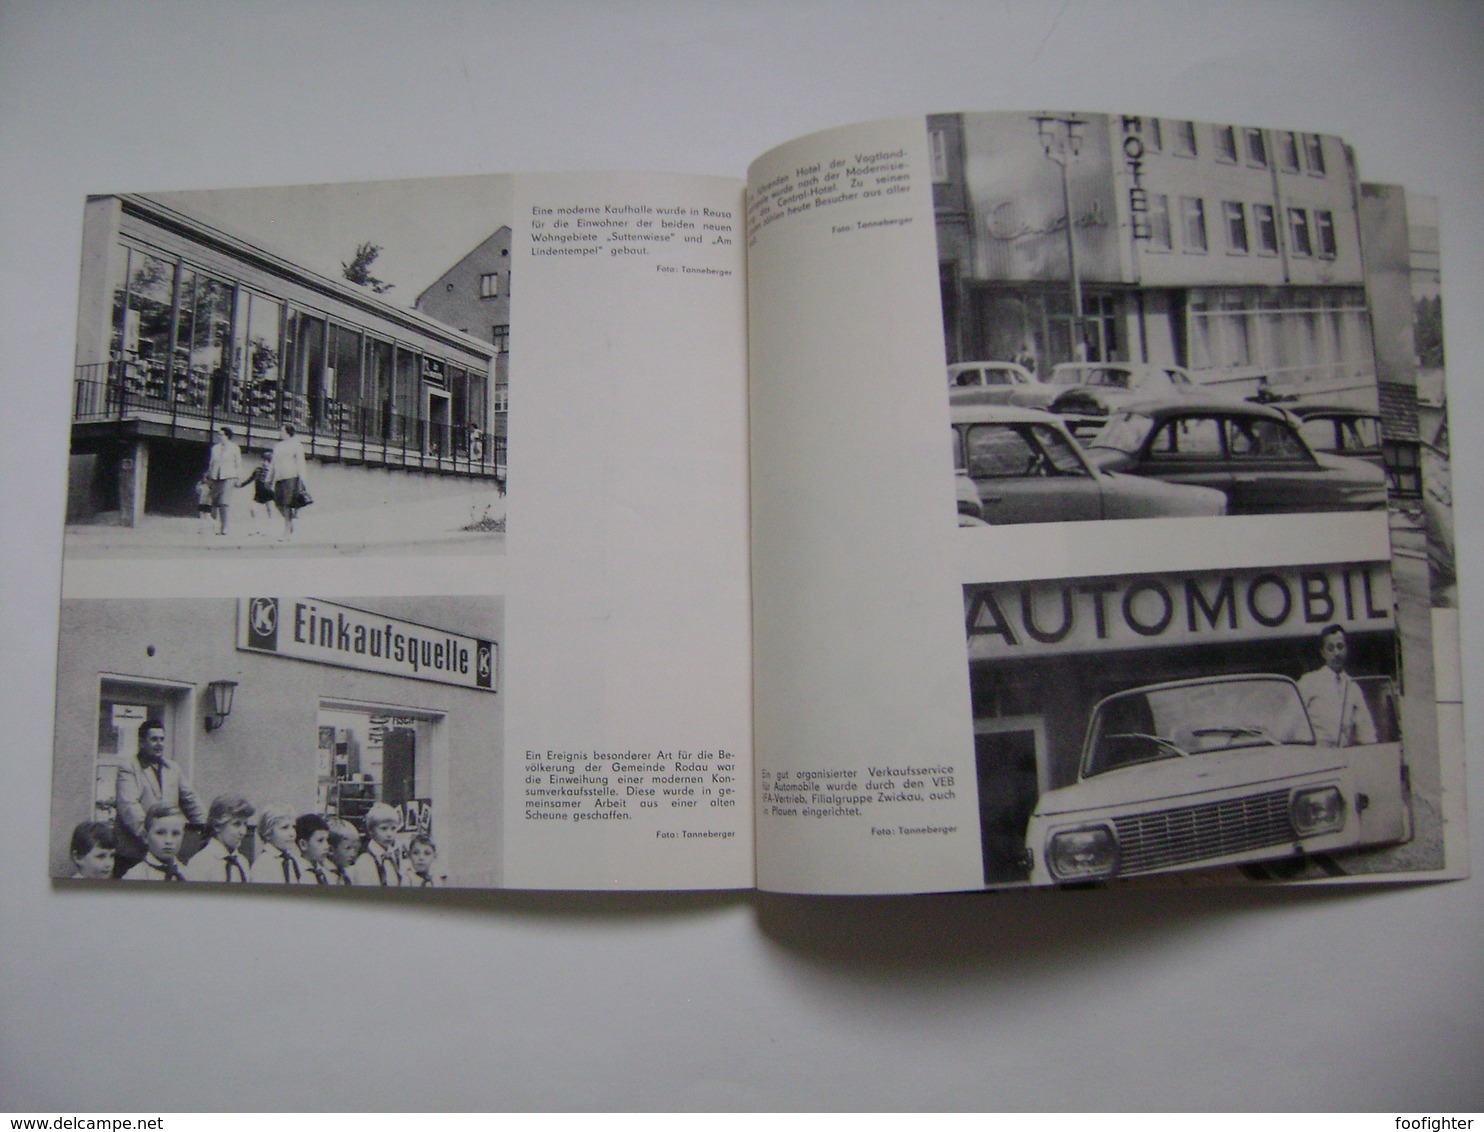 Germany DDR: 20 Jahre PLAUEN Stadt u. Land 1969, brochure 96 pages, photos history buildings industry sport politics etc